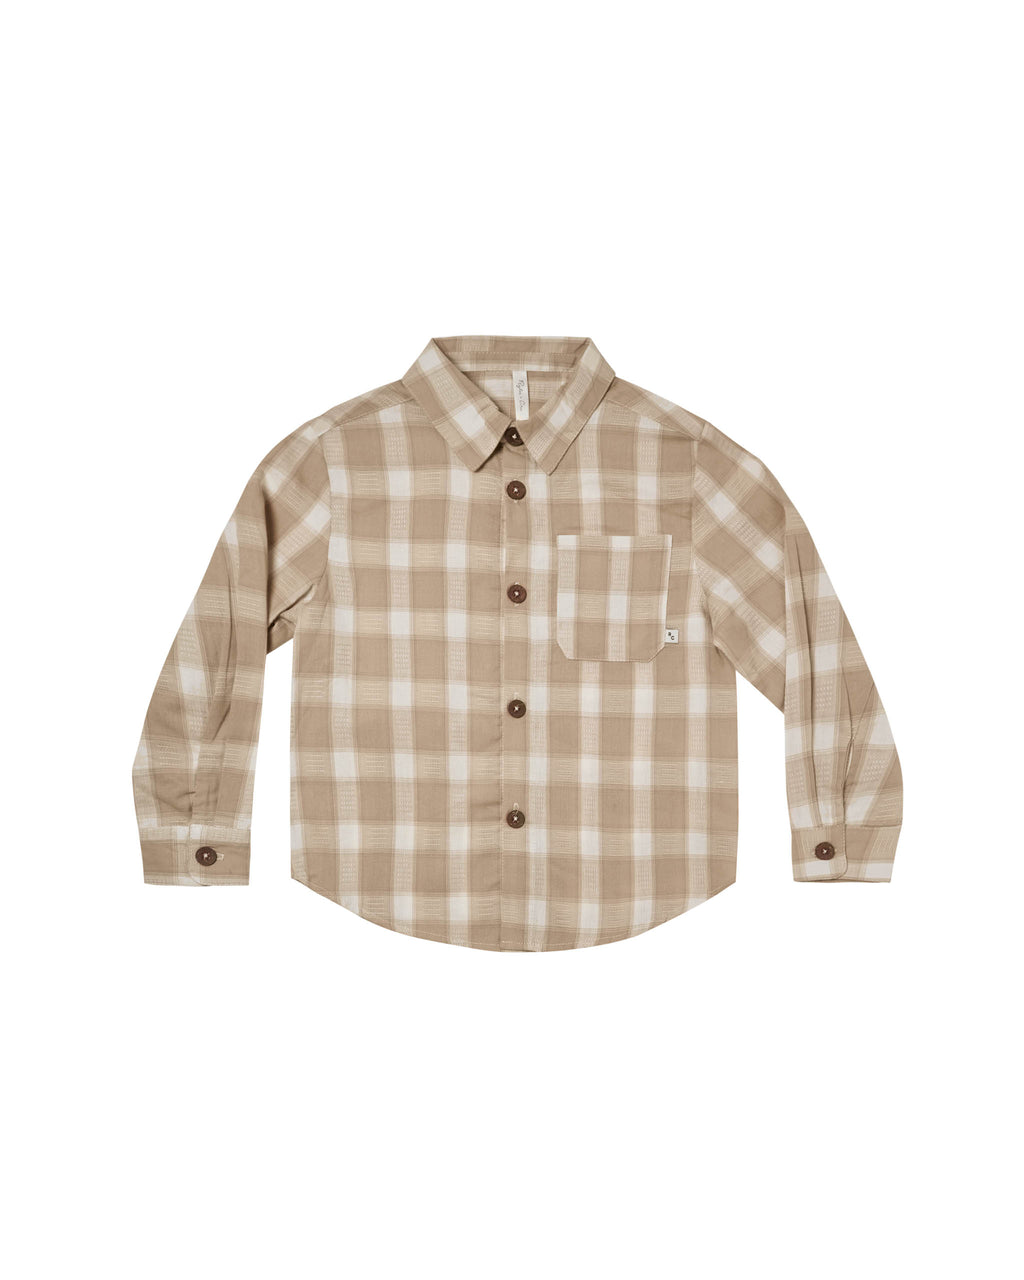 Rylee + Cru Collared Long Sleeve Shirt - Putty Plaid